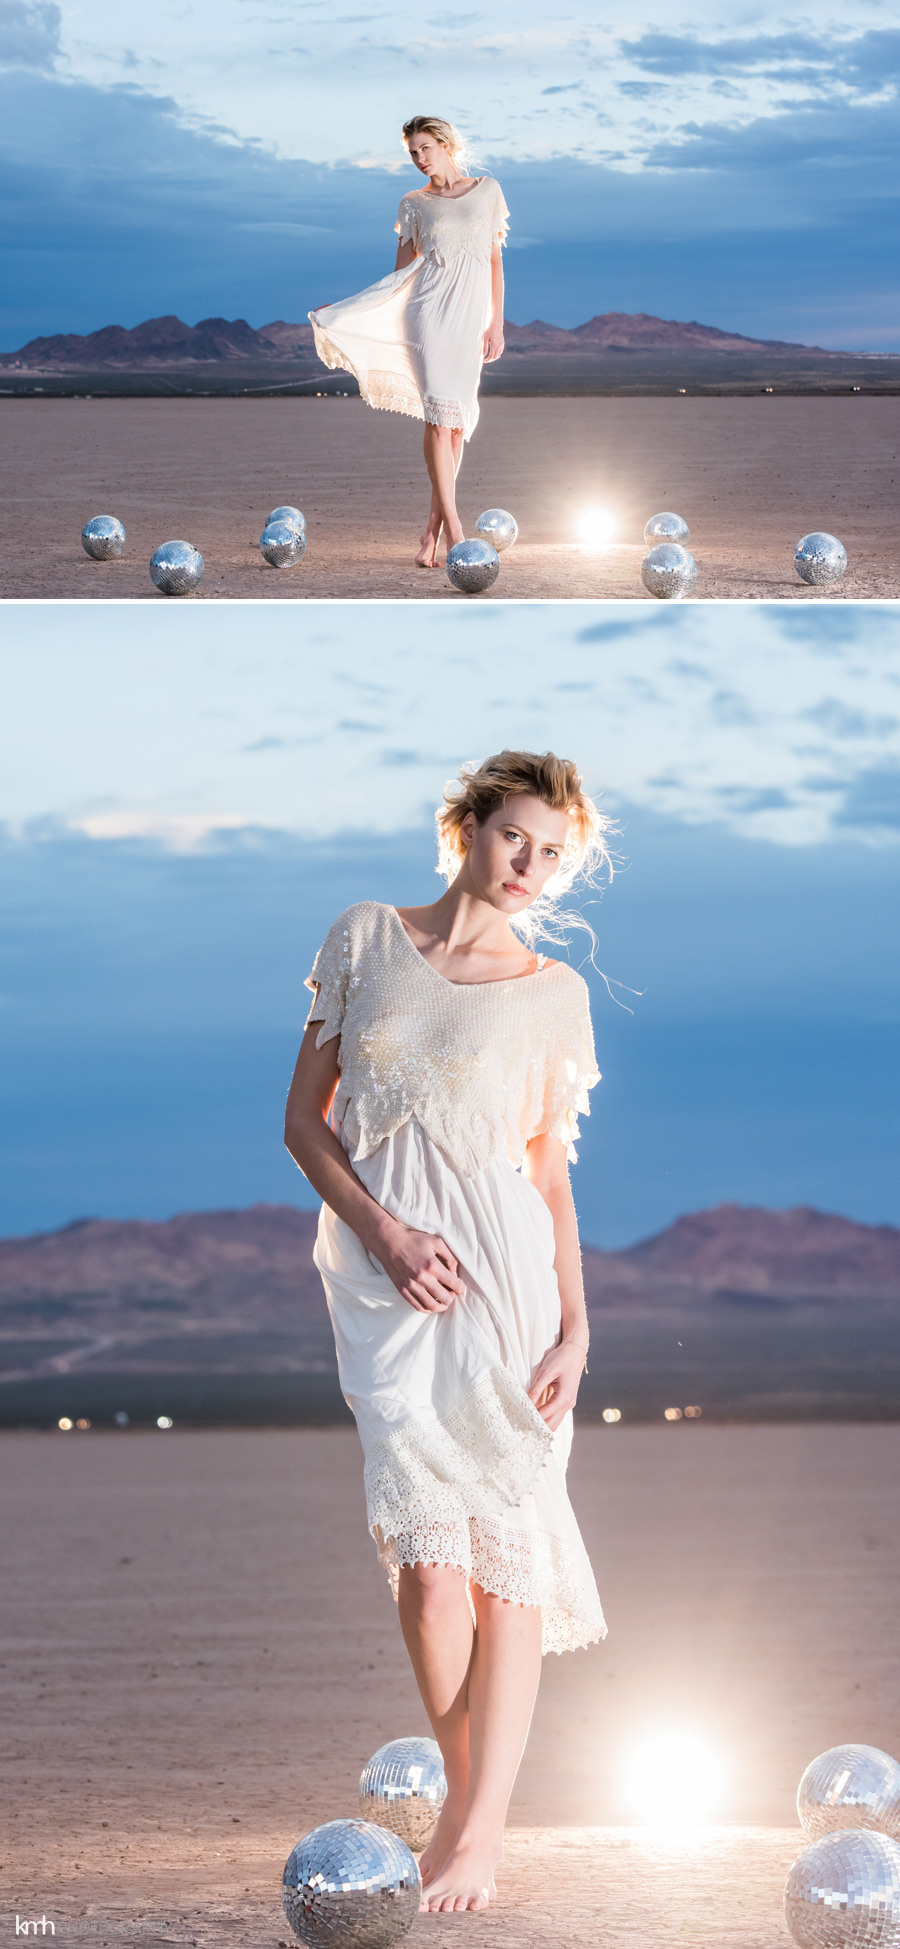 Metallic Desert Fashion Photoshoot | KMH Photography | Las Vegas Portrait Photographer